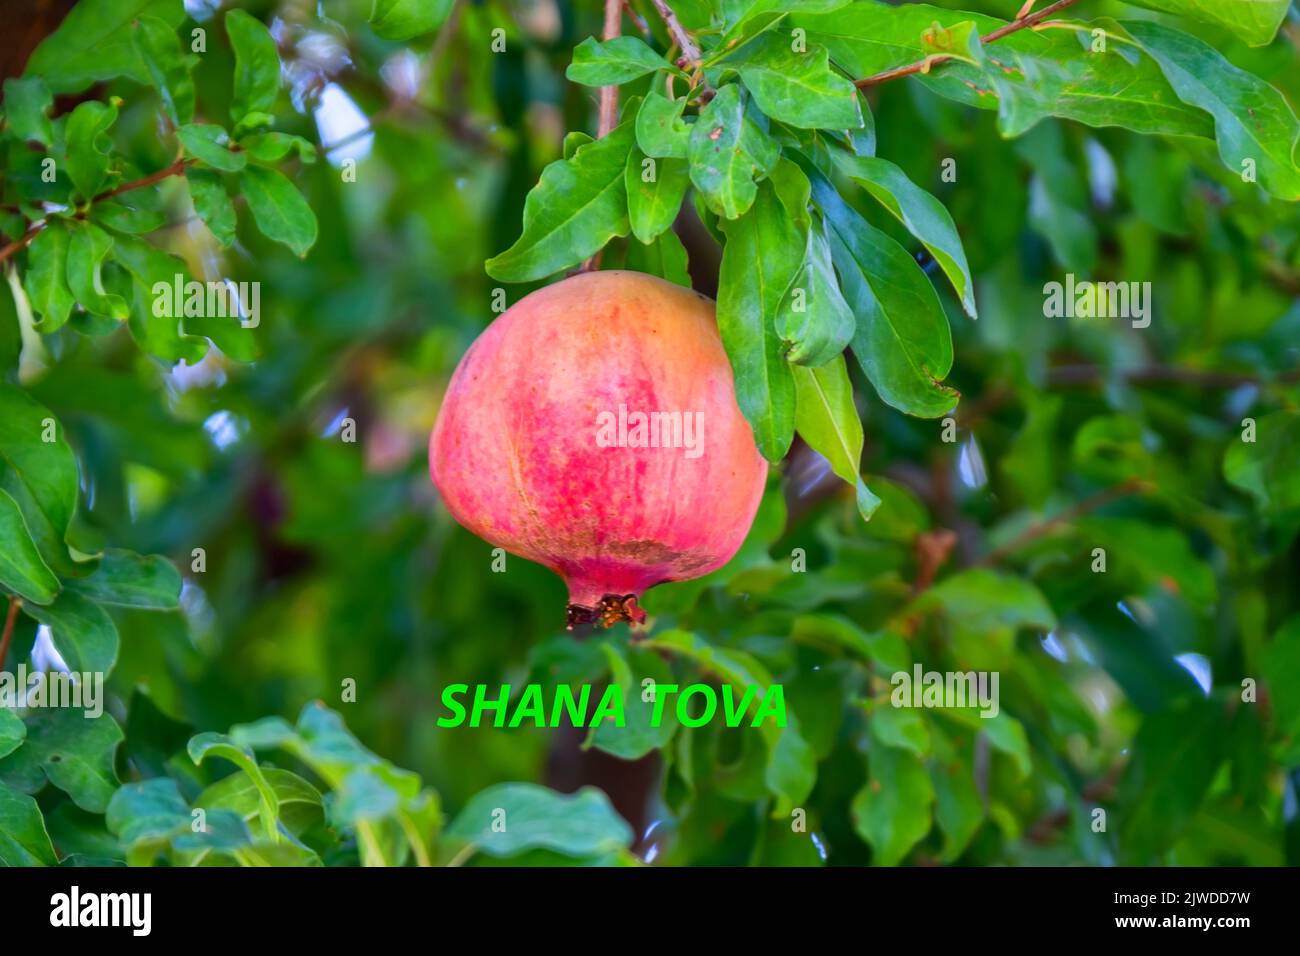 Jewish New Year Greeting: Shana Tova with pomegranate growing on tree Stock Photo